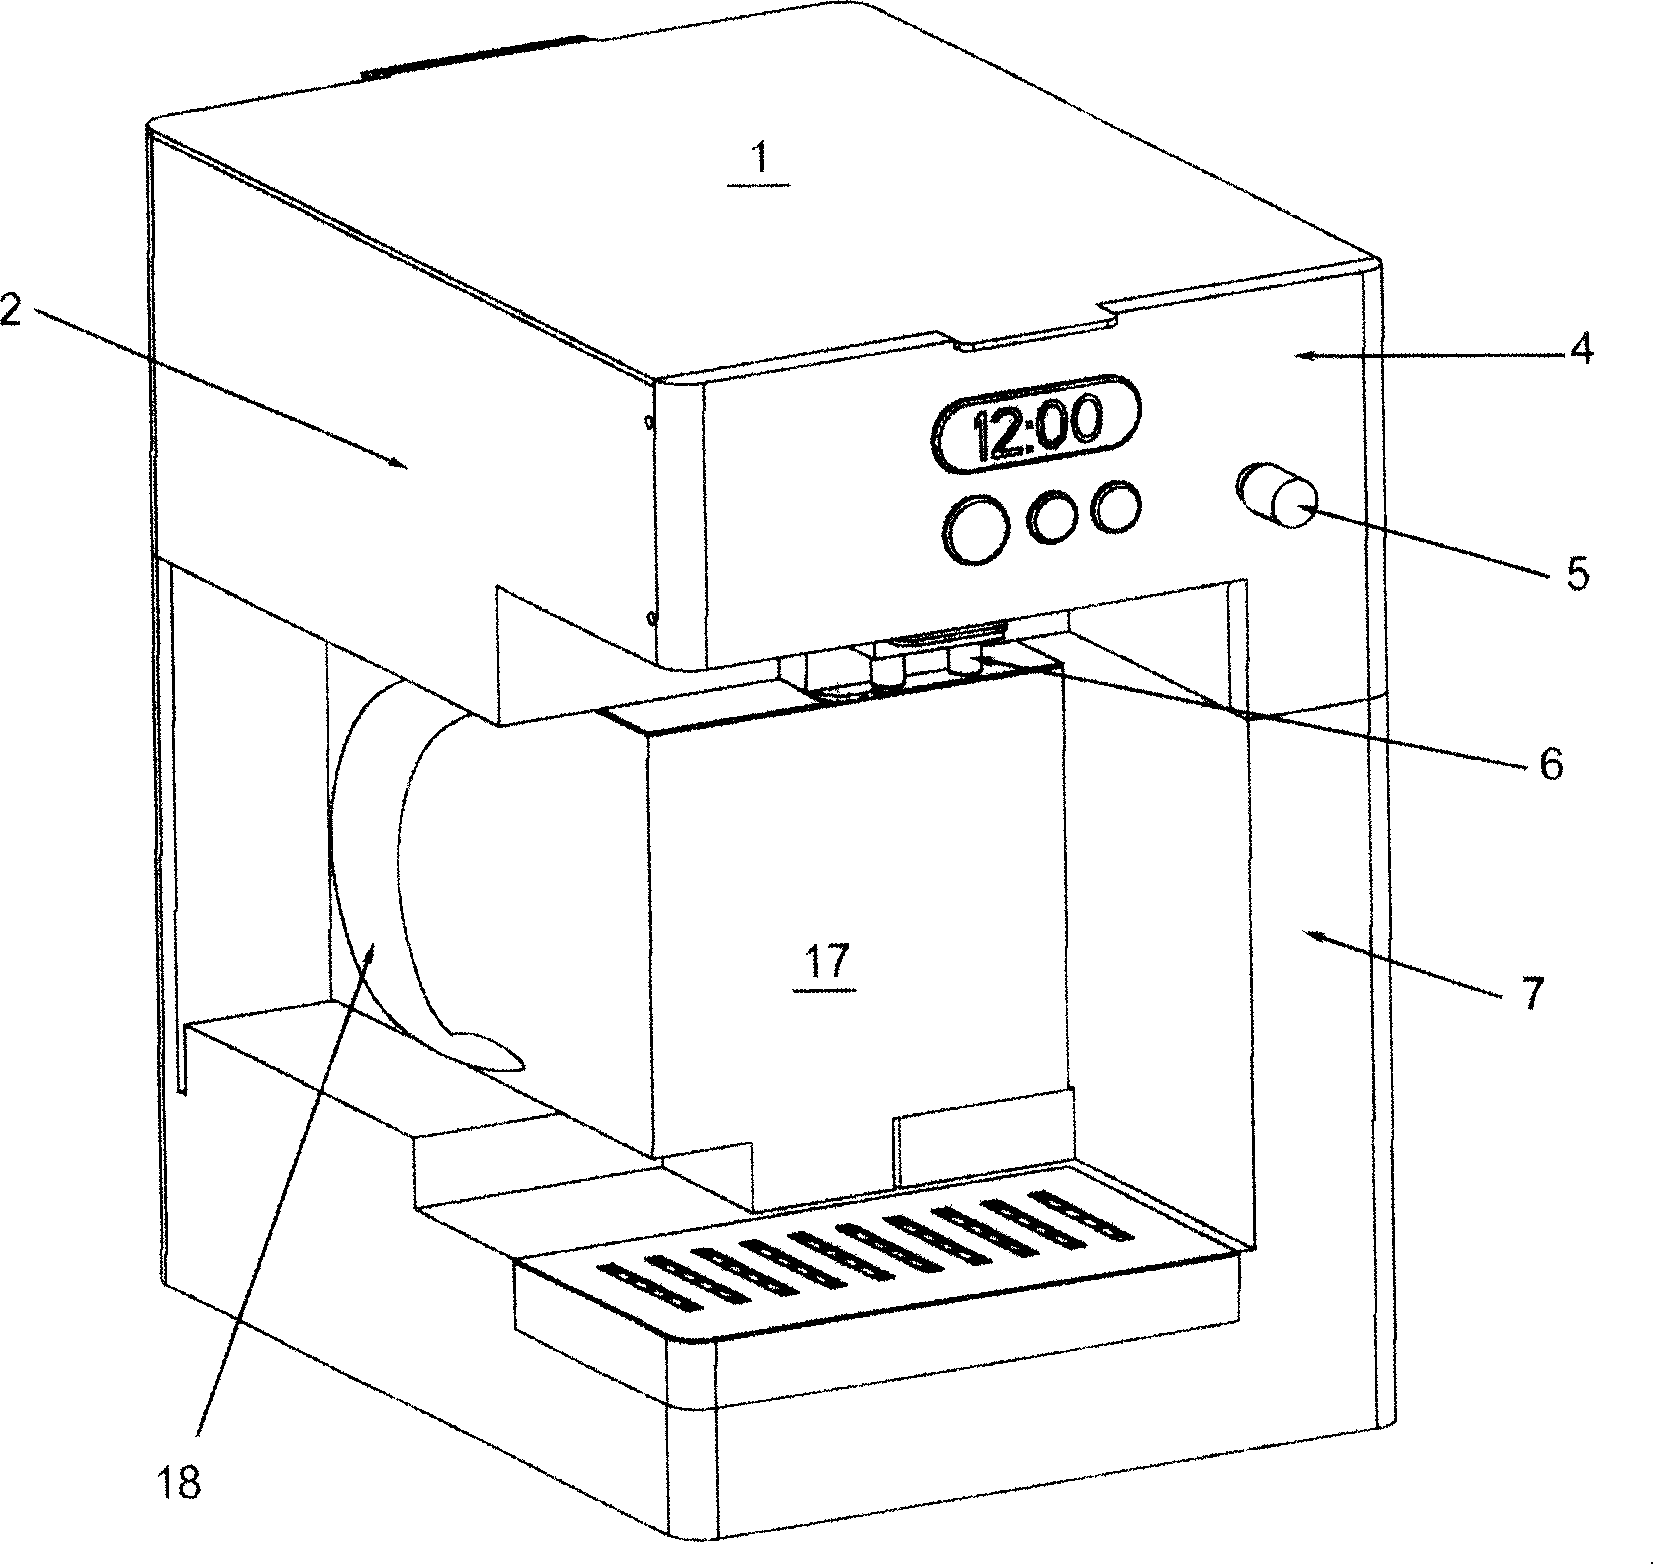 Hot drinks machine with distribution mechanism